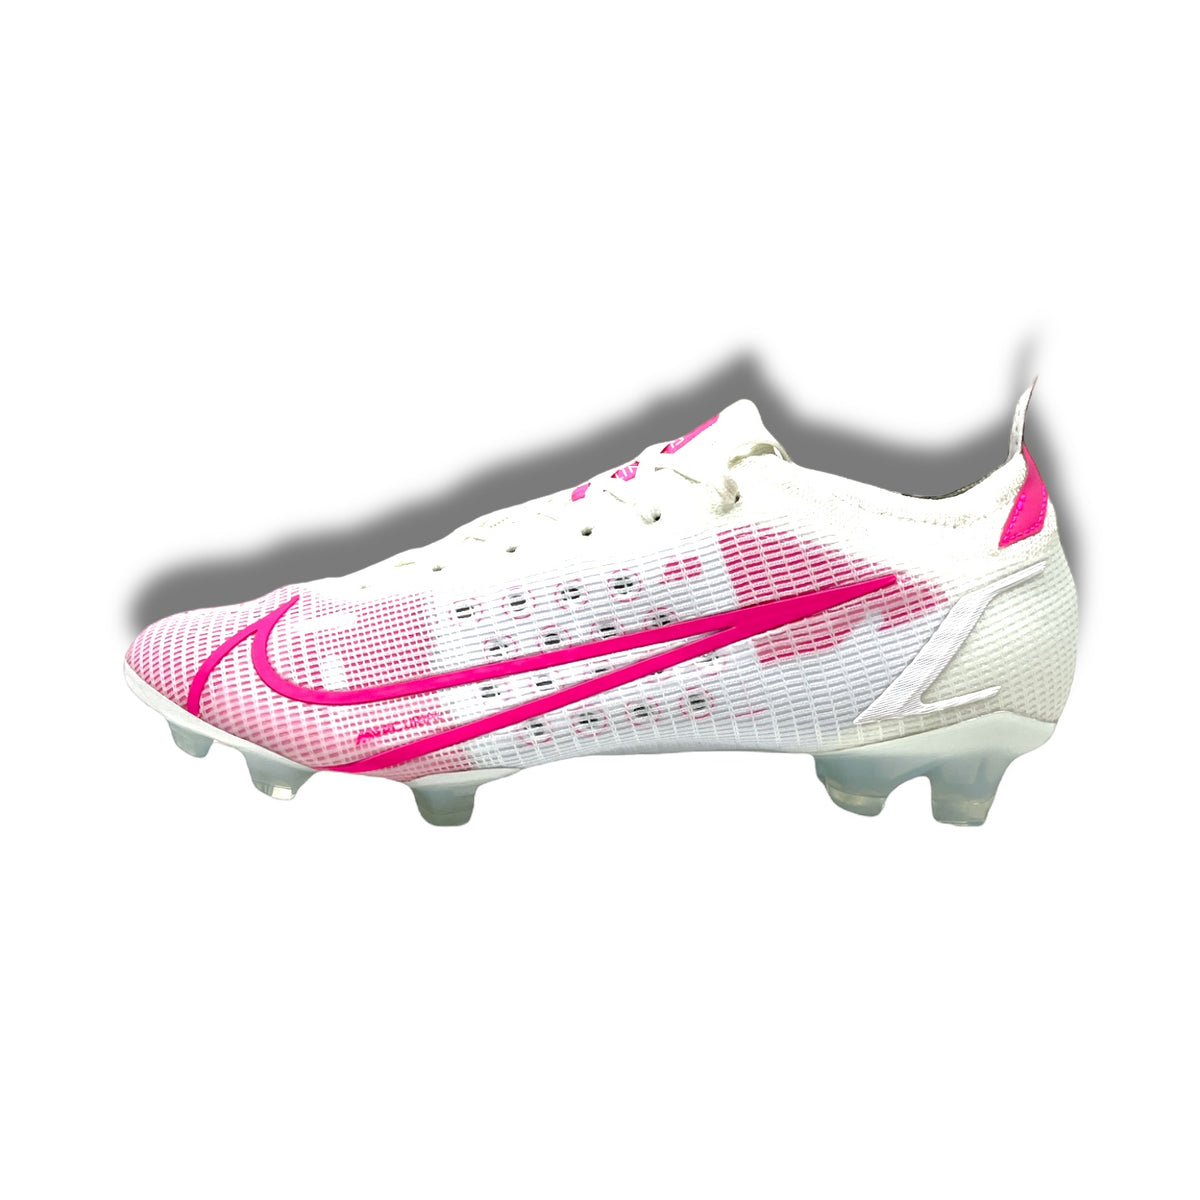 Nike Mercurial Vapor 14 Elite FG ID pink white